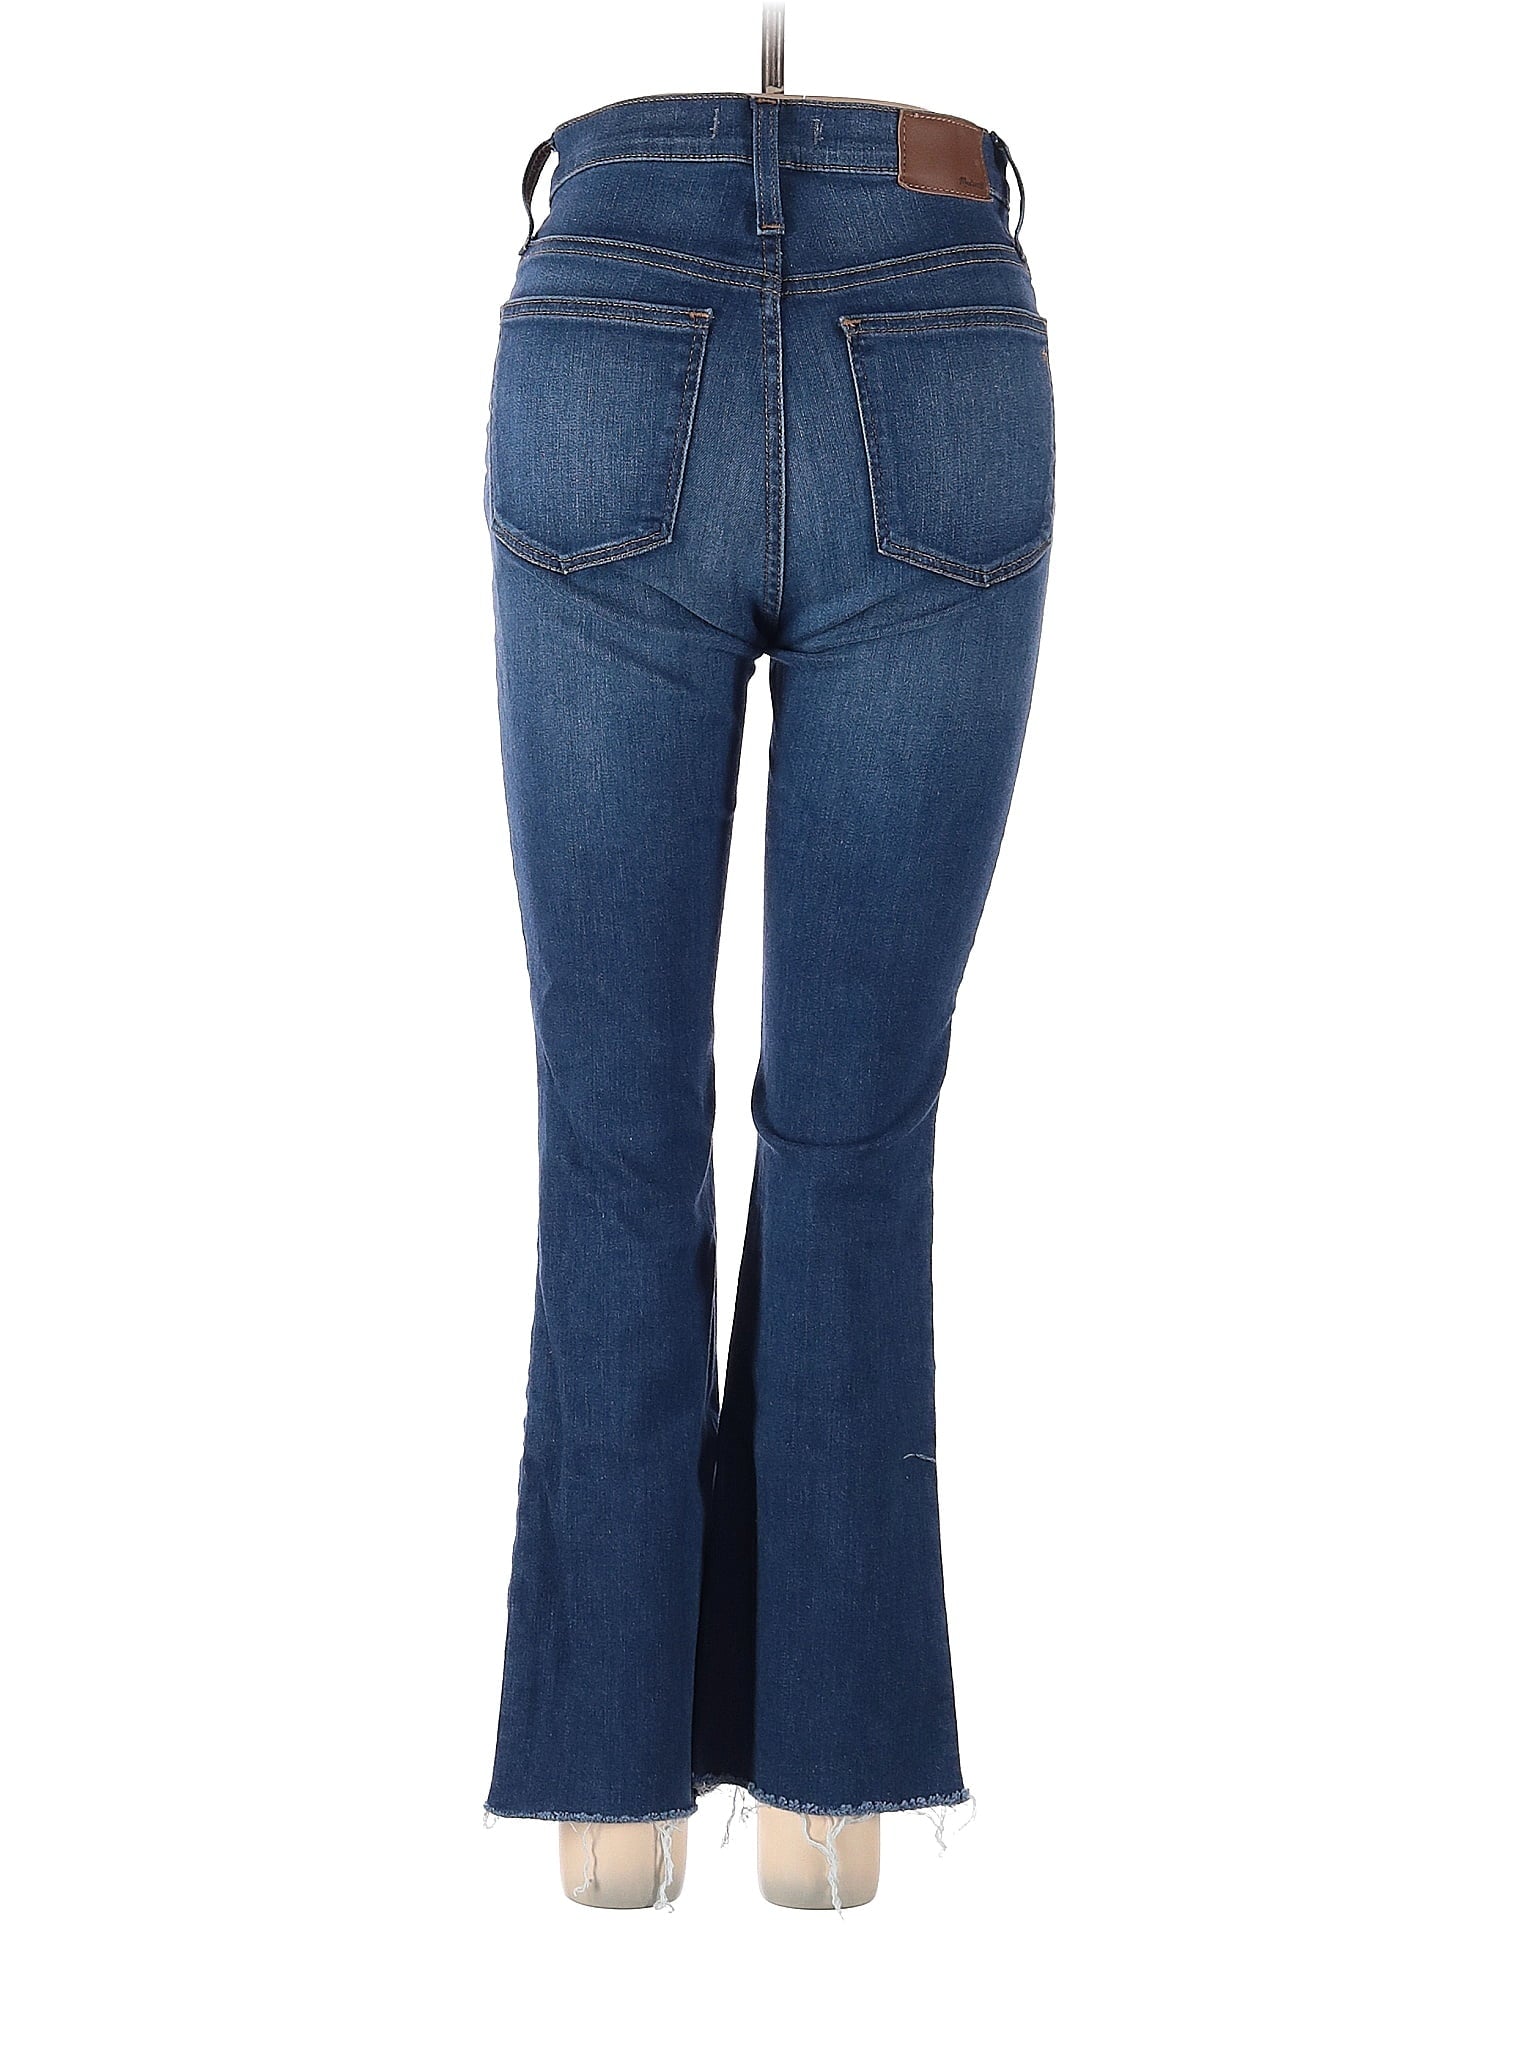 High-Rise Boyjeans Cali Demi-Boot Jeans In Marco Wash in Dark Wash waist size - 25